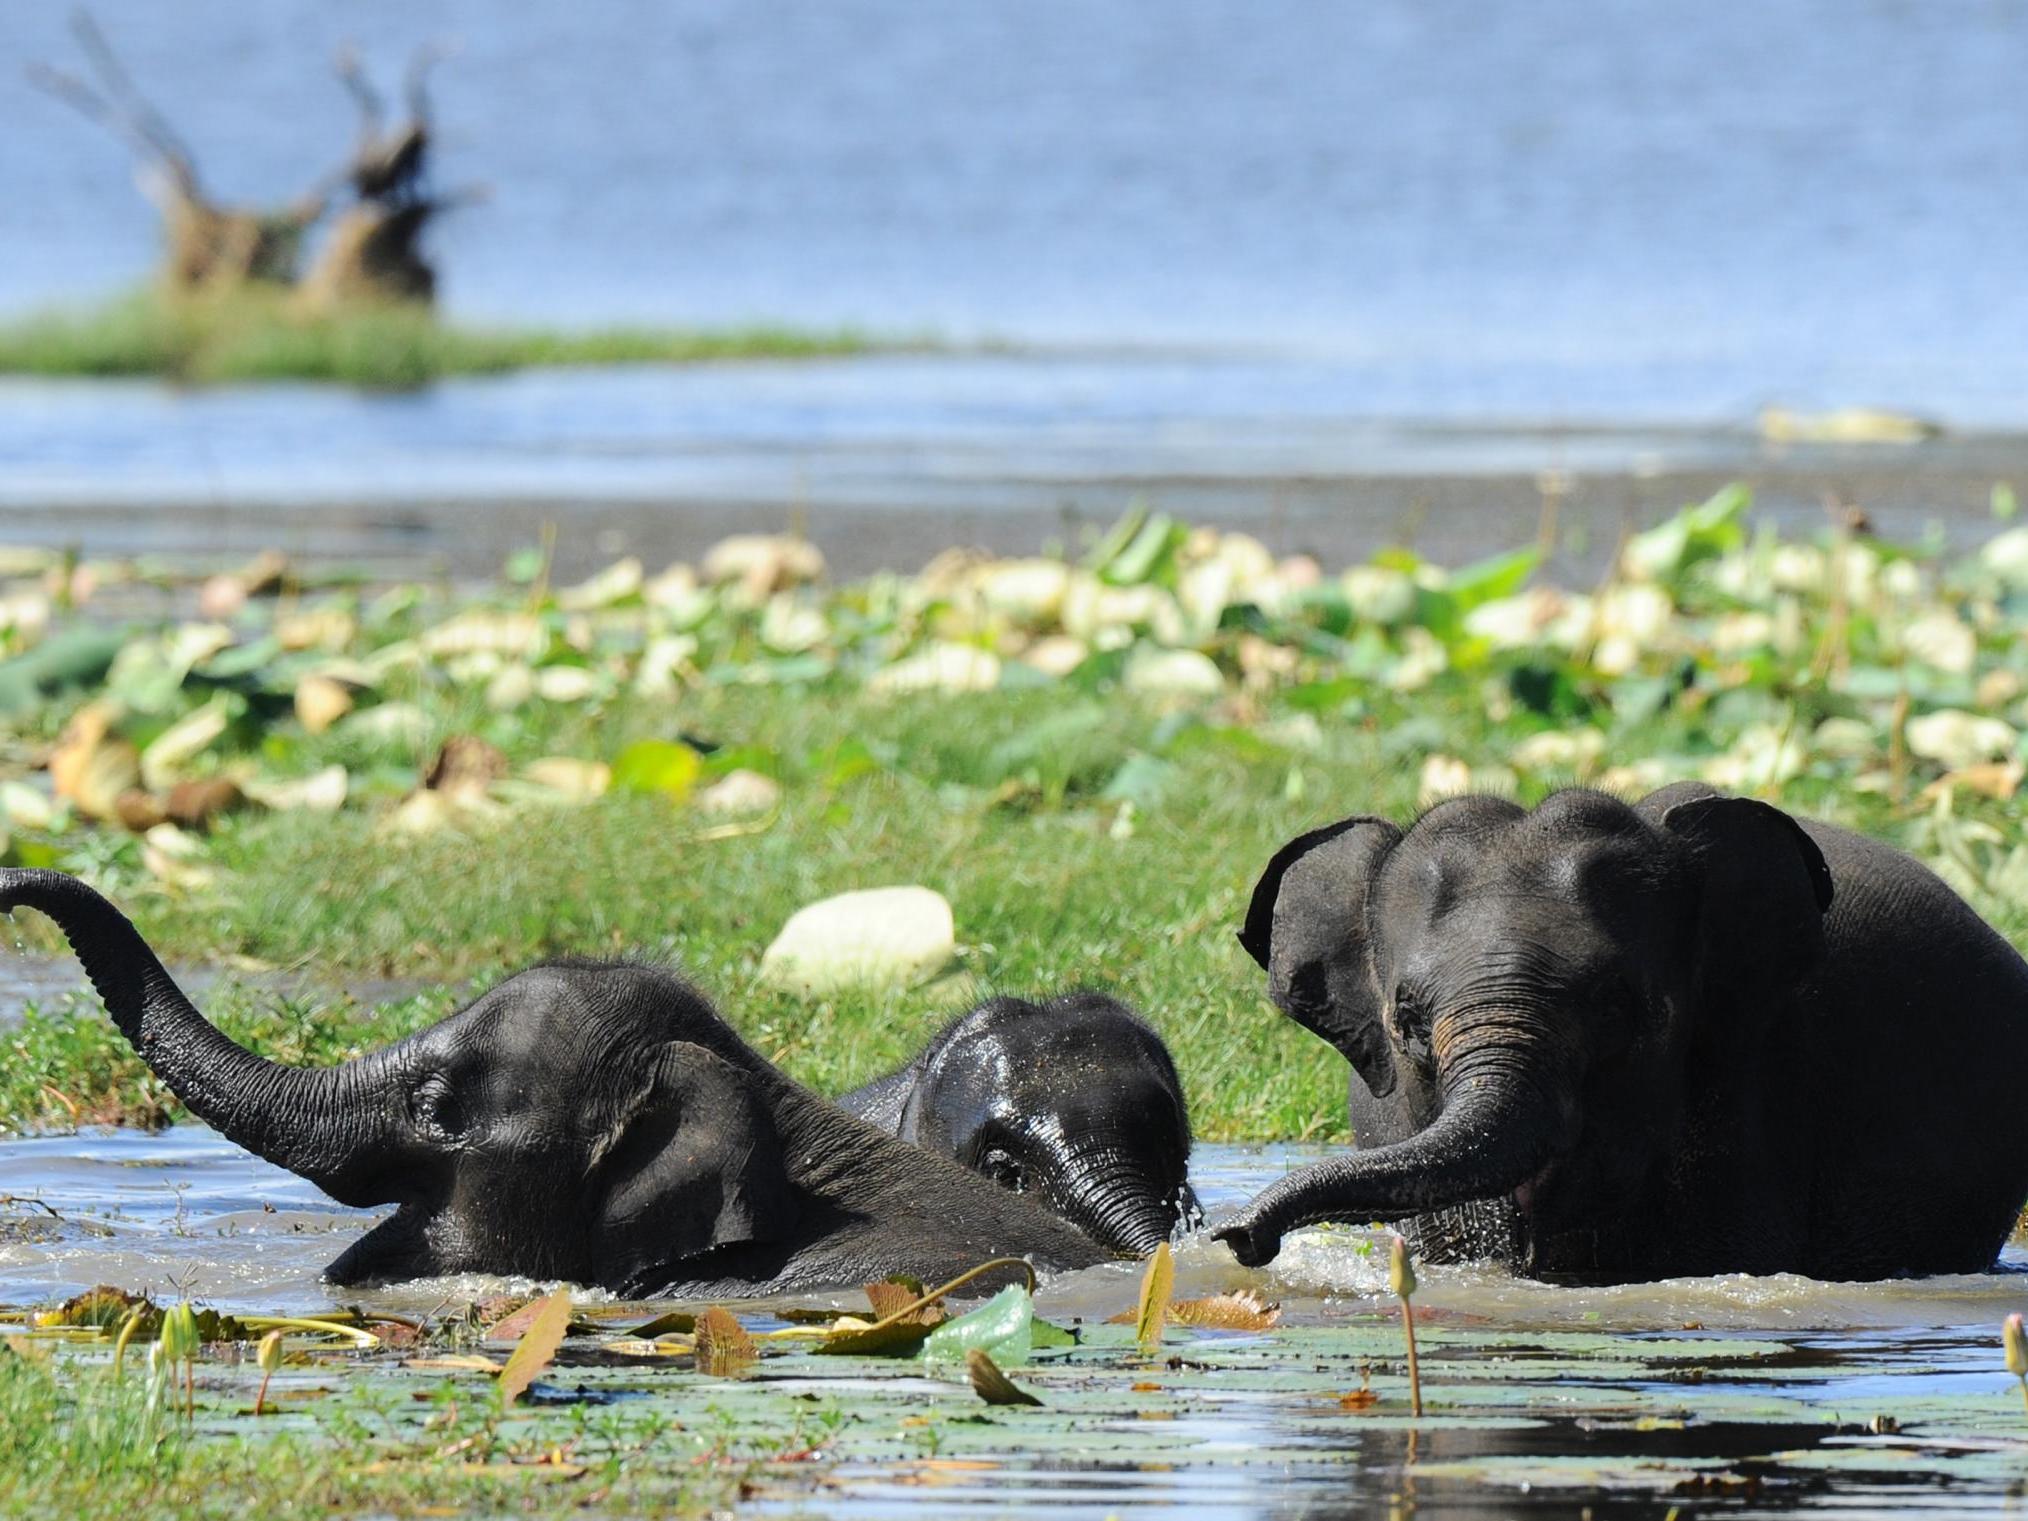 Baby elephant bulls can be seen bathing in Sri Lanka’s Yala National Park